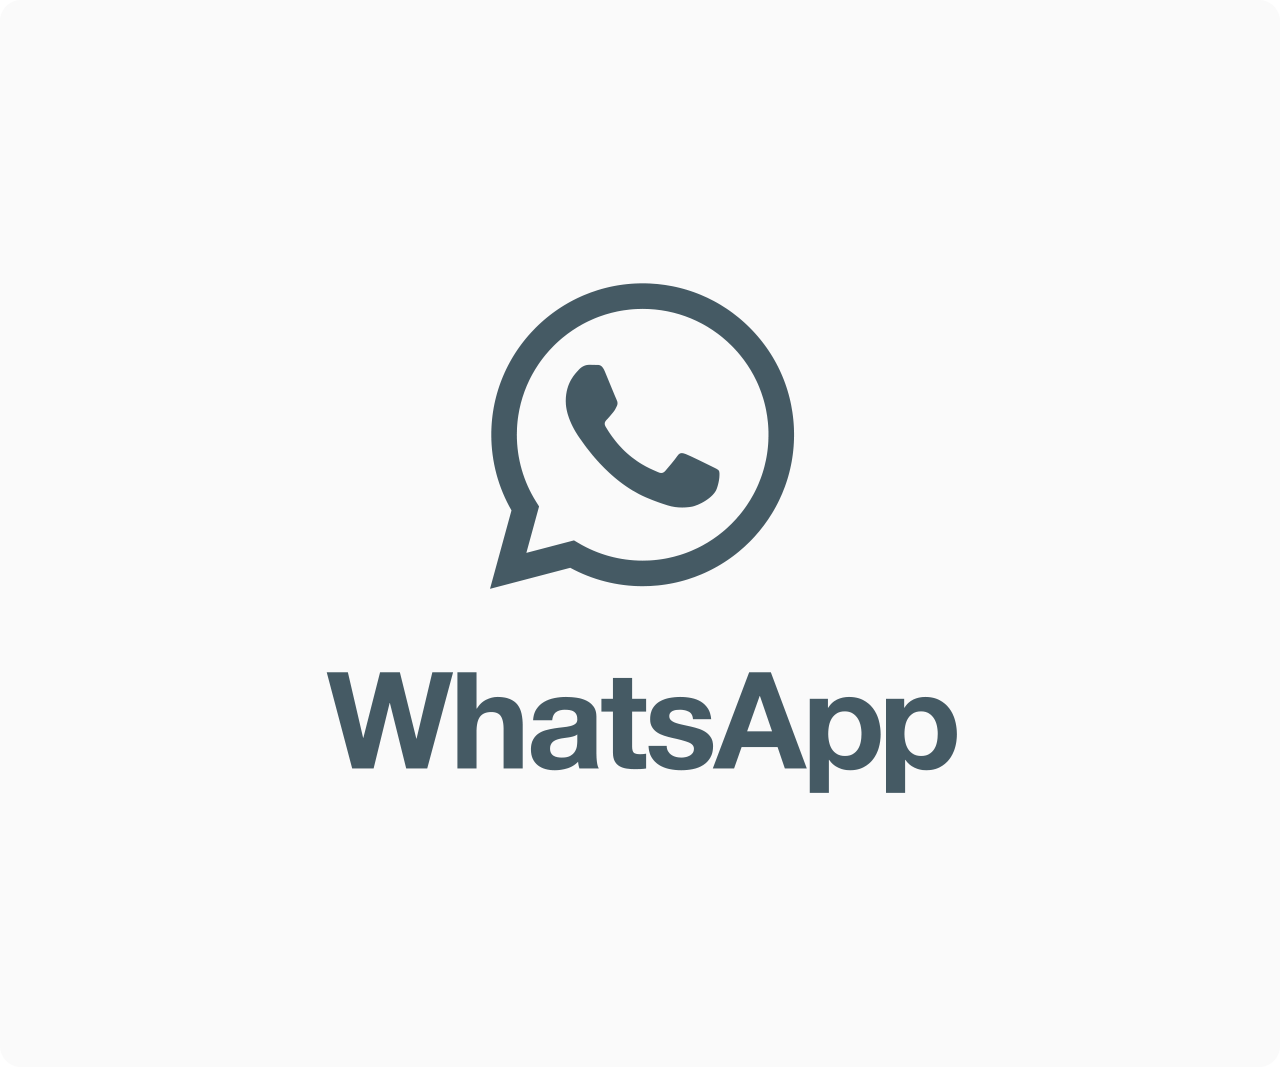 WhatsApp icon with wordmark